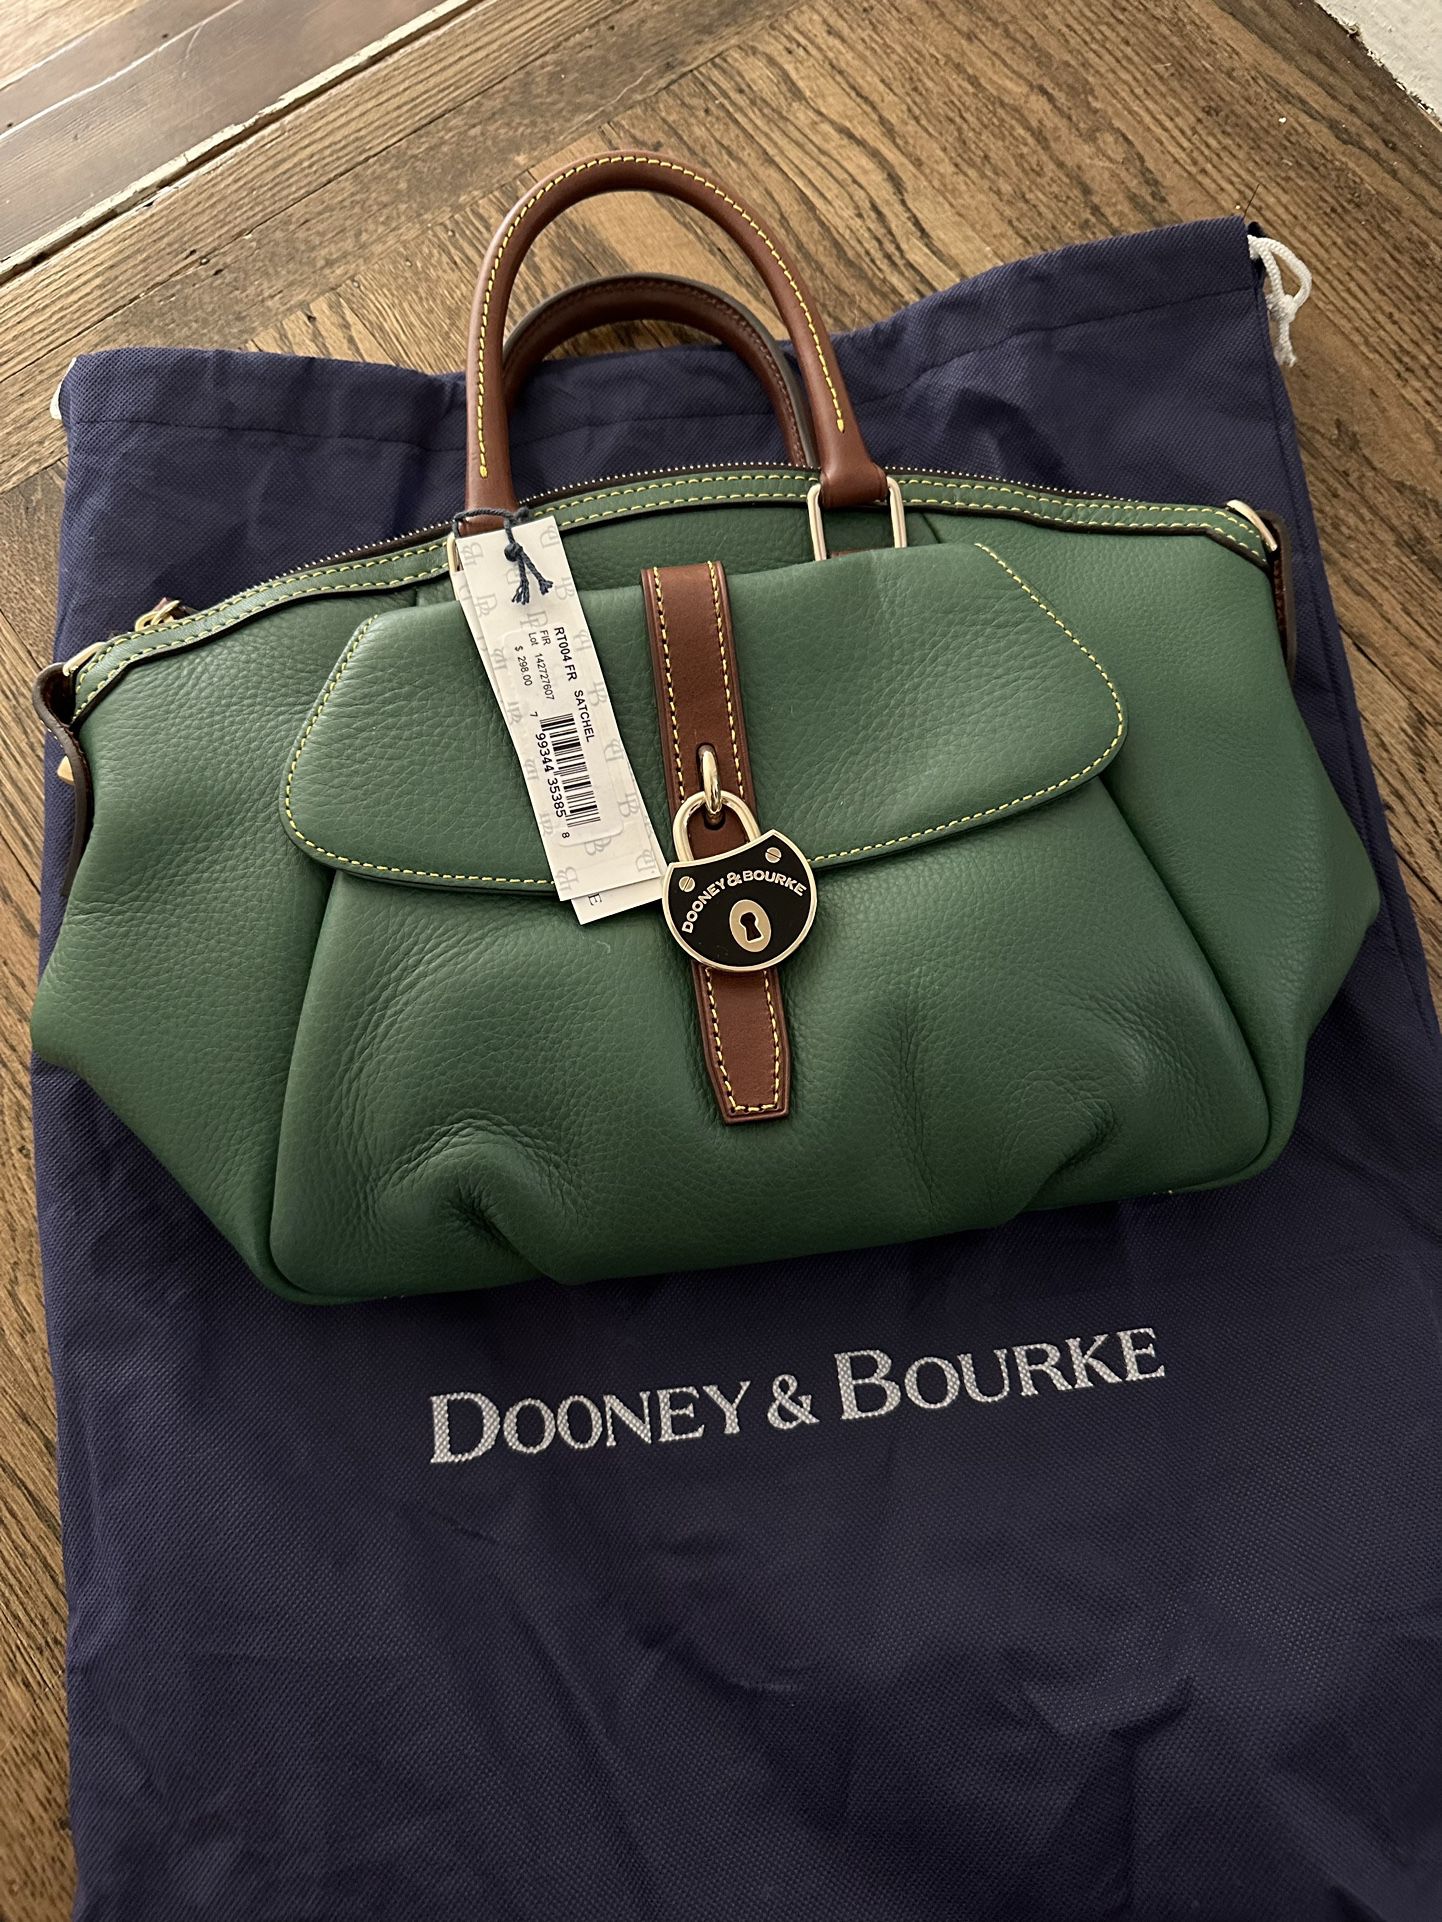 NEW - Green Dooney & Burke Bag